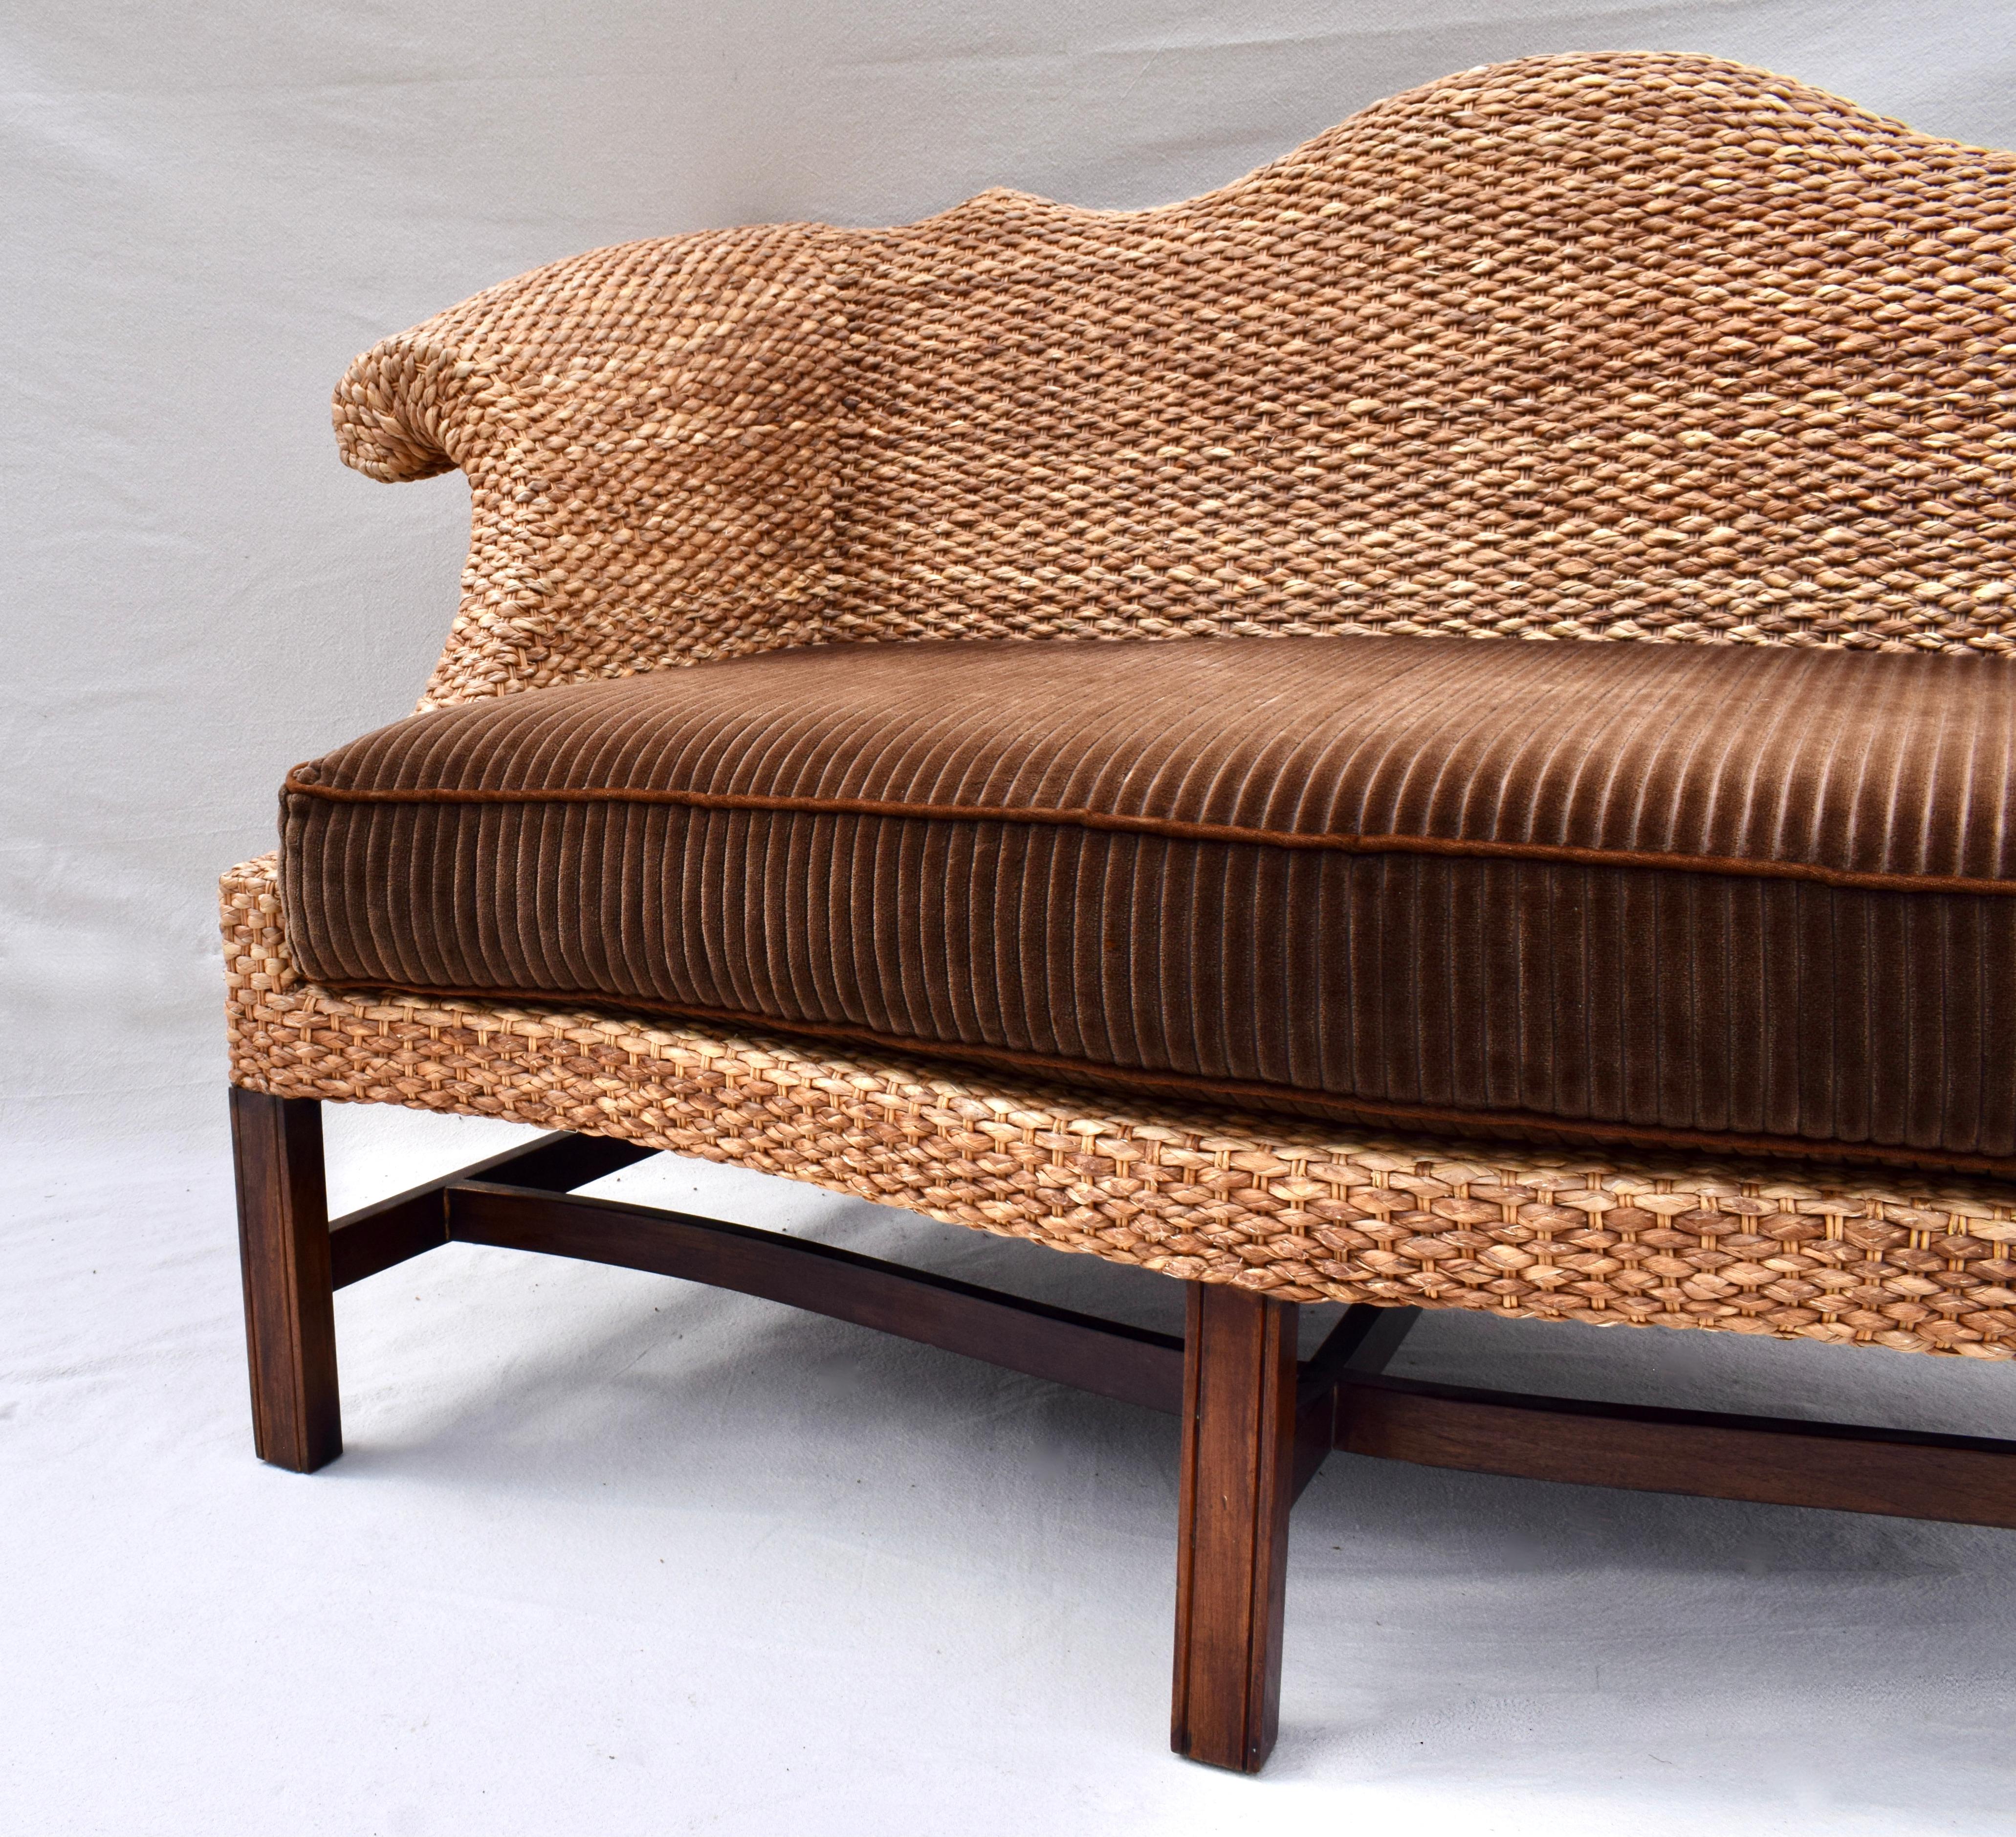 george rattan furniture -china -b2b -forum -blog -wikipedia -.cn -.gov -alibaba